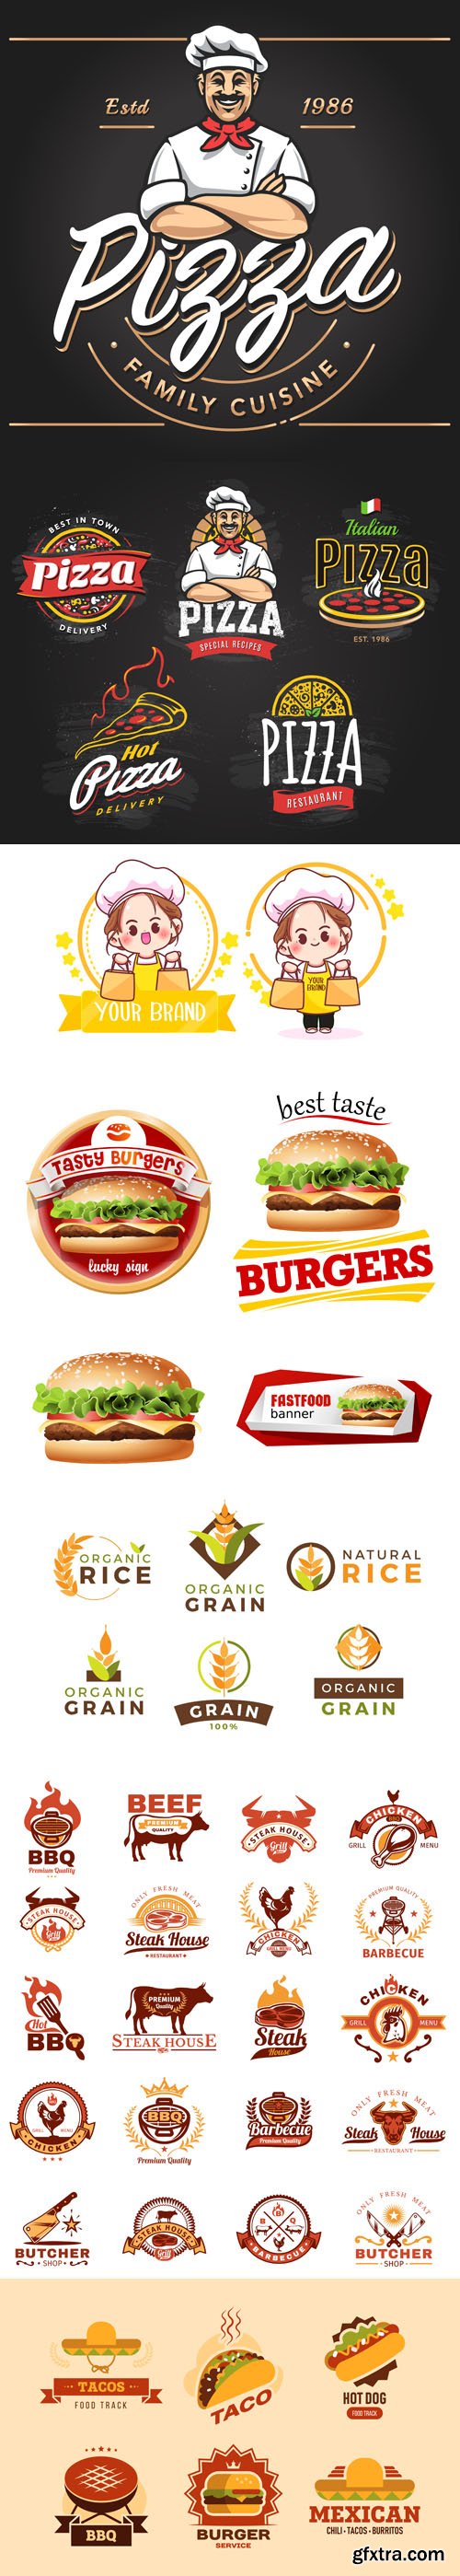 65+ Food Logos - Vector Design Templates